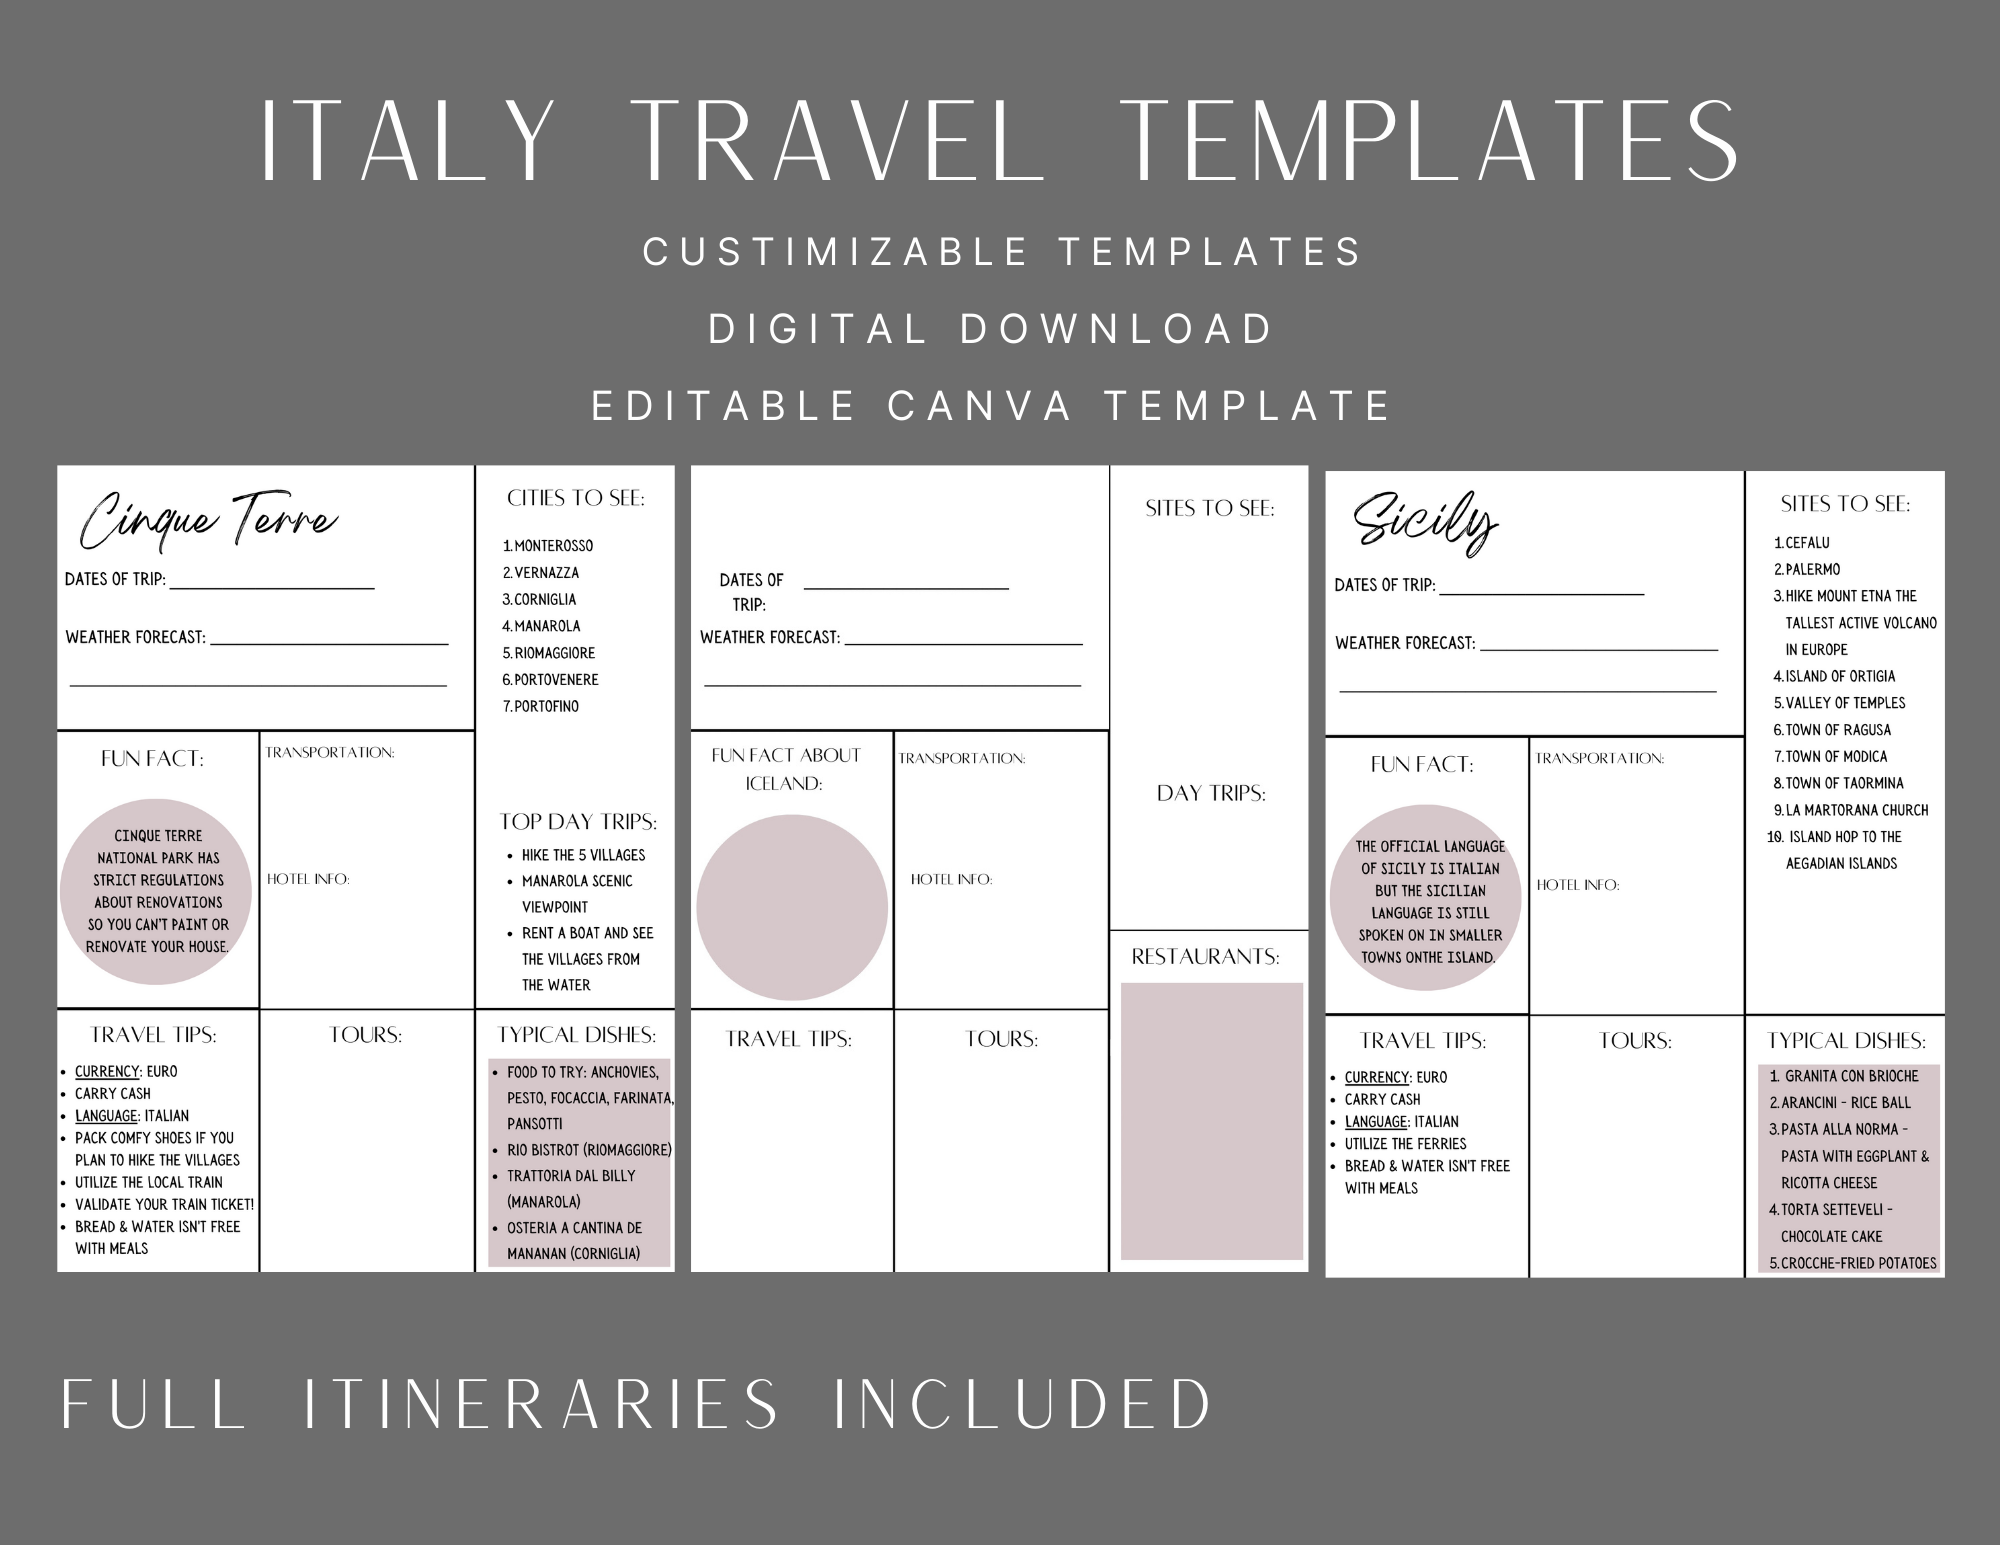 Full itineraries for popular Italian cities